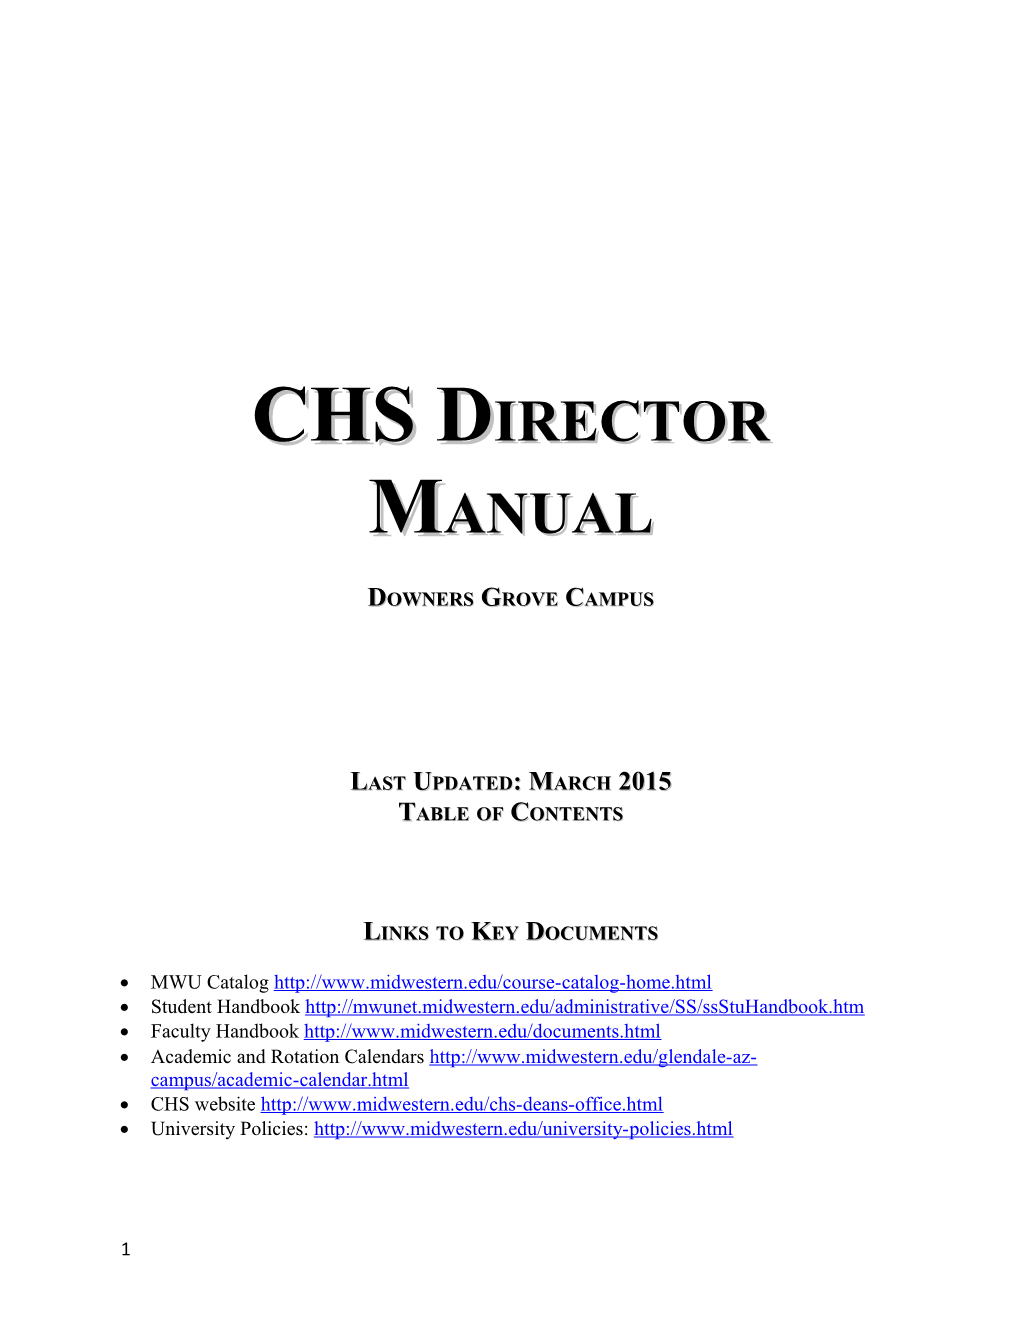 CHS Director Manual